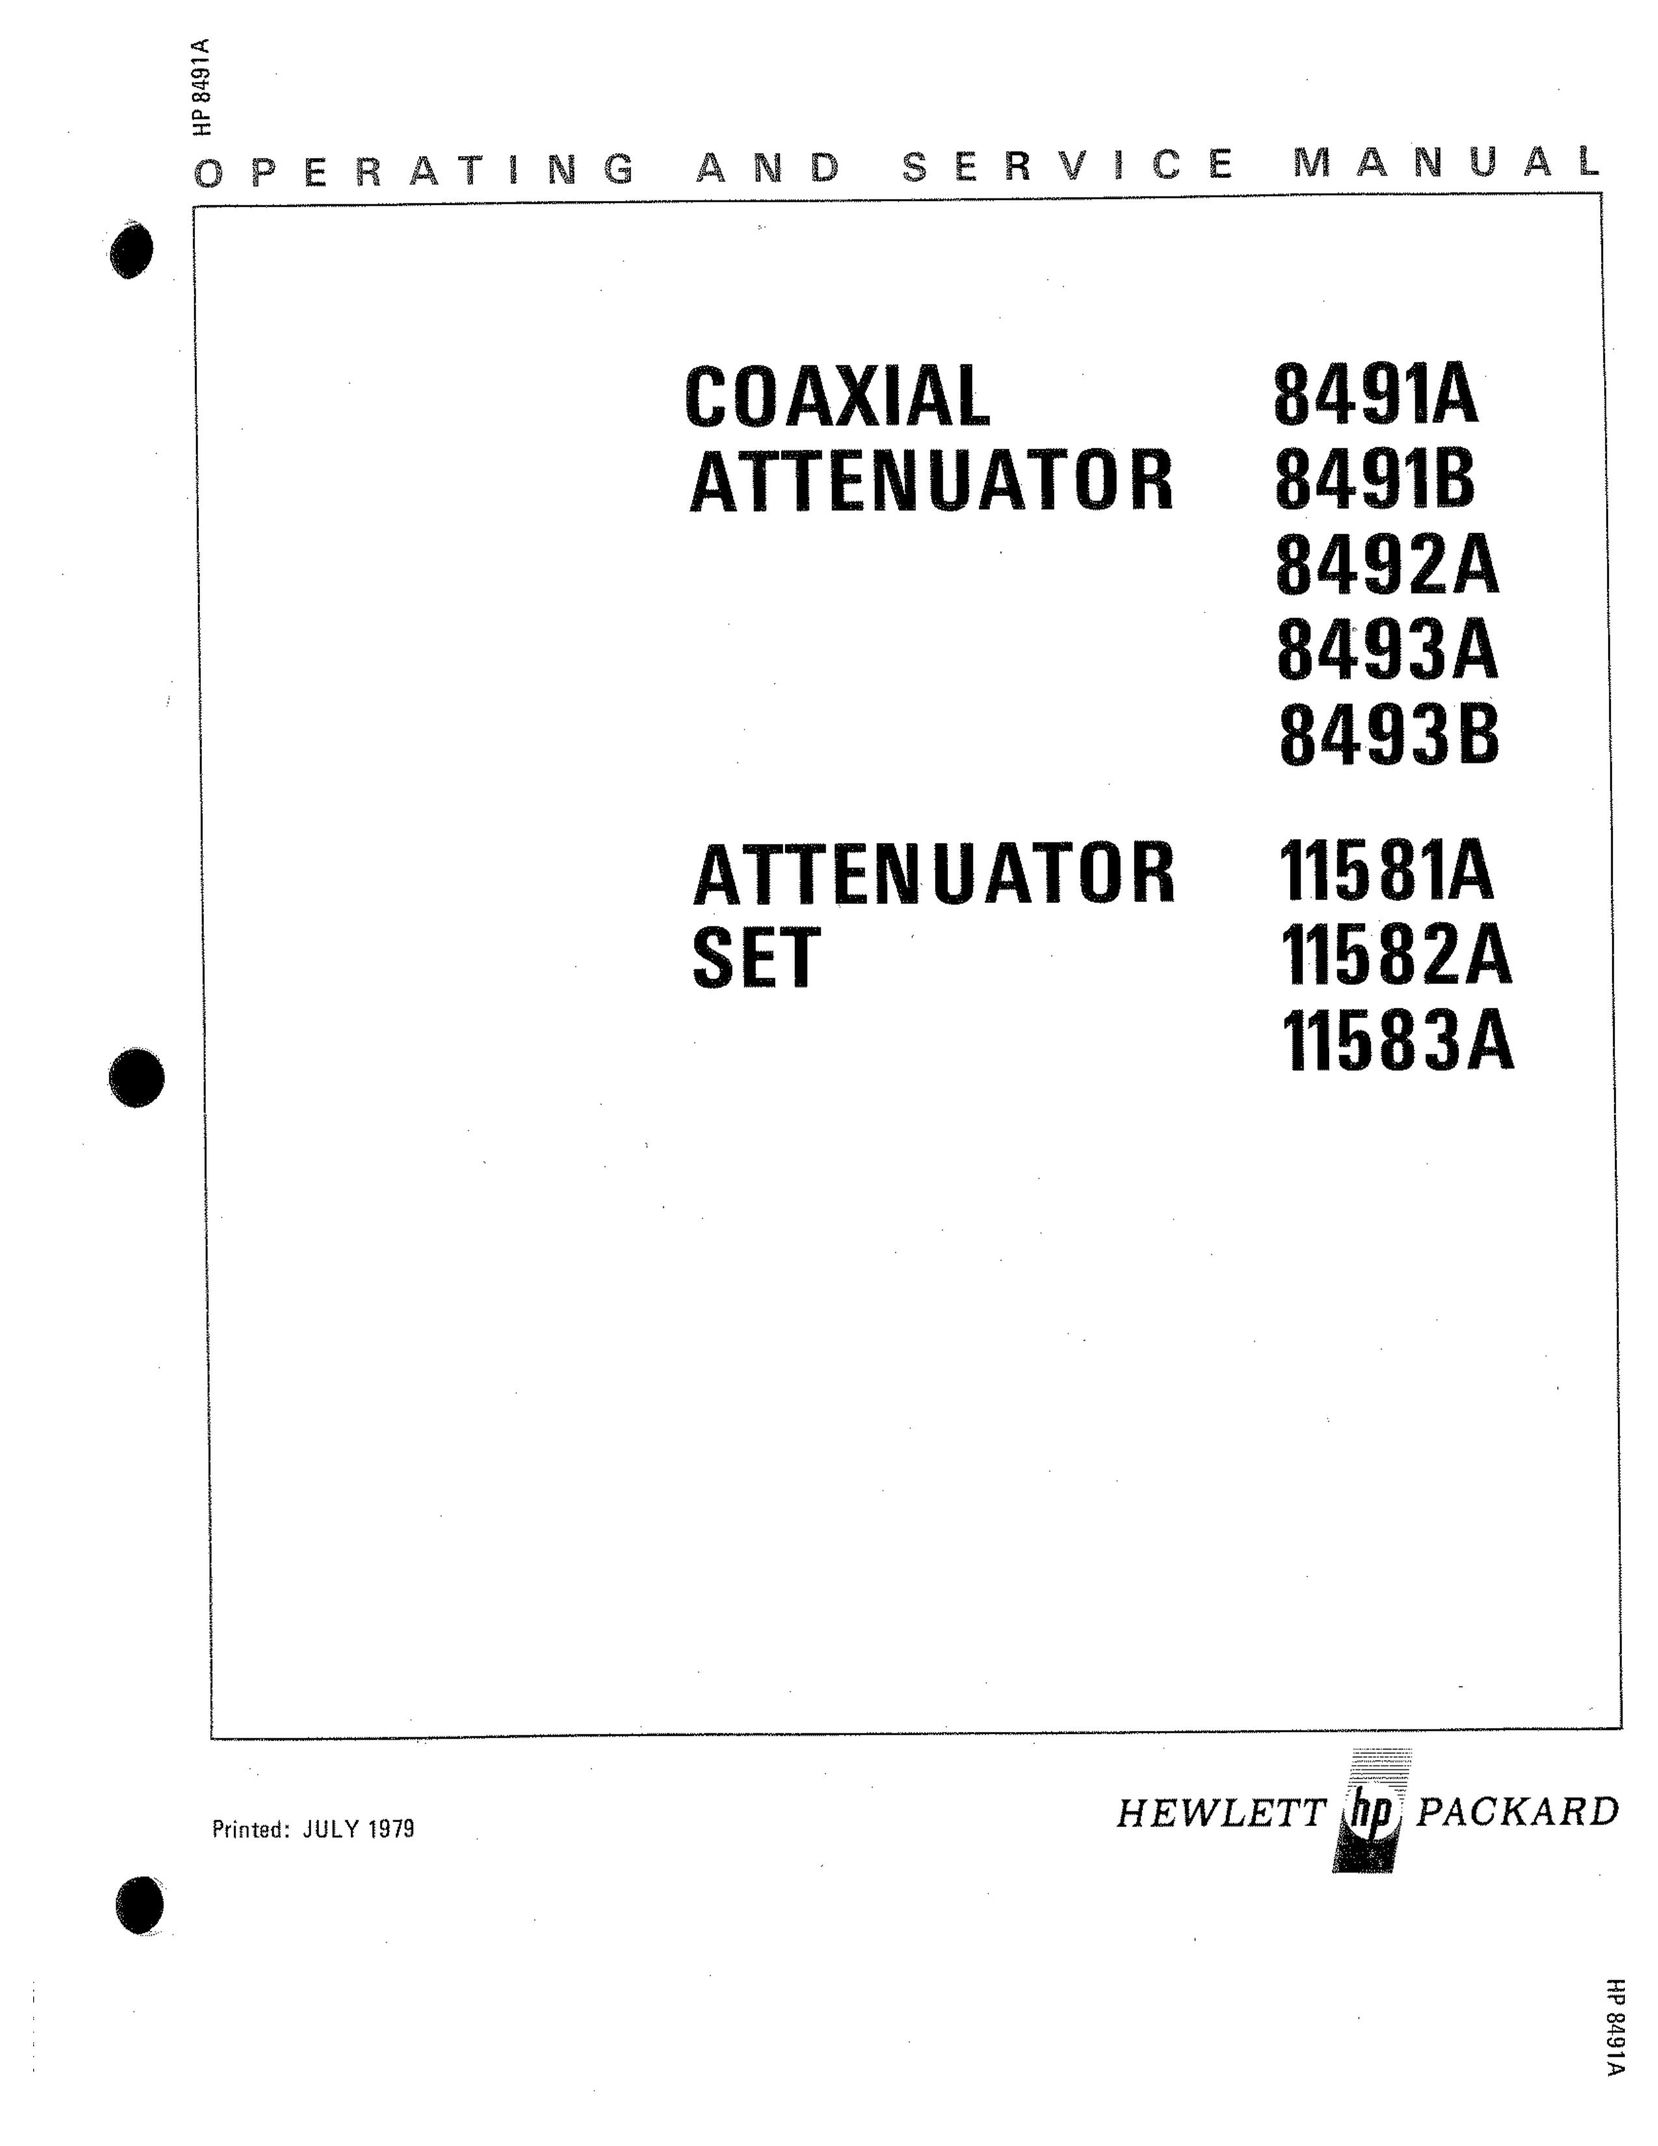 HP (Hewlett-Packard) 11582A TV Cables User Manual